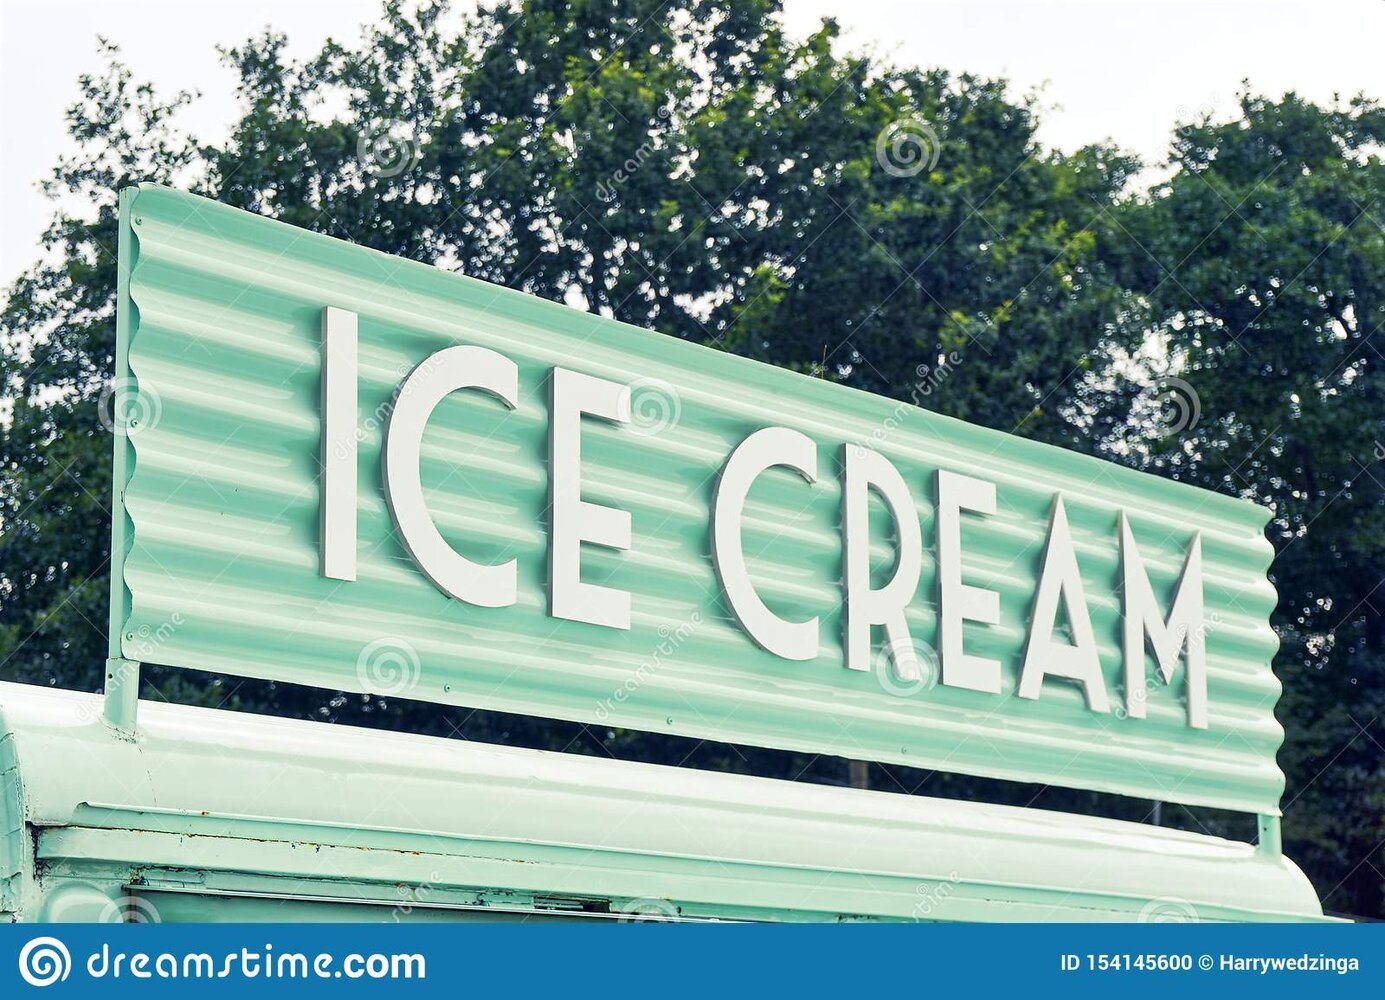 ice-cream-sign-food-truck-ice-cream-sign-retro-image-roof-light-green-food-truck-white-text-ic...jpg